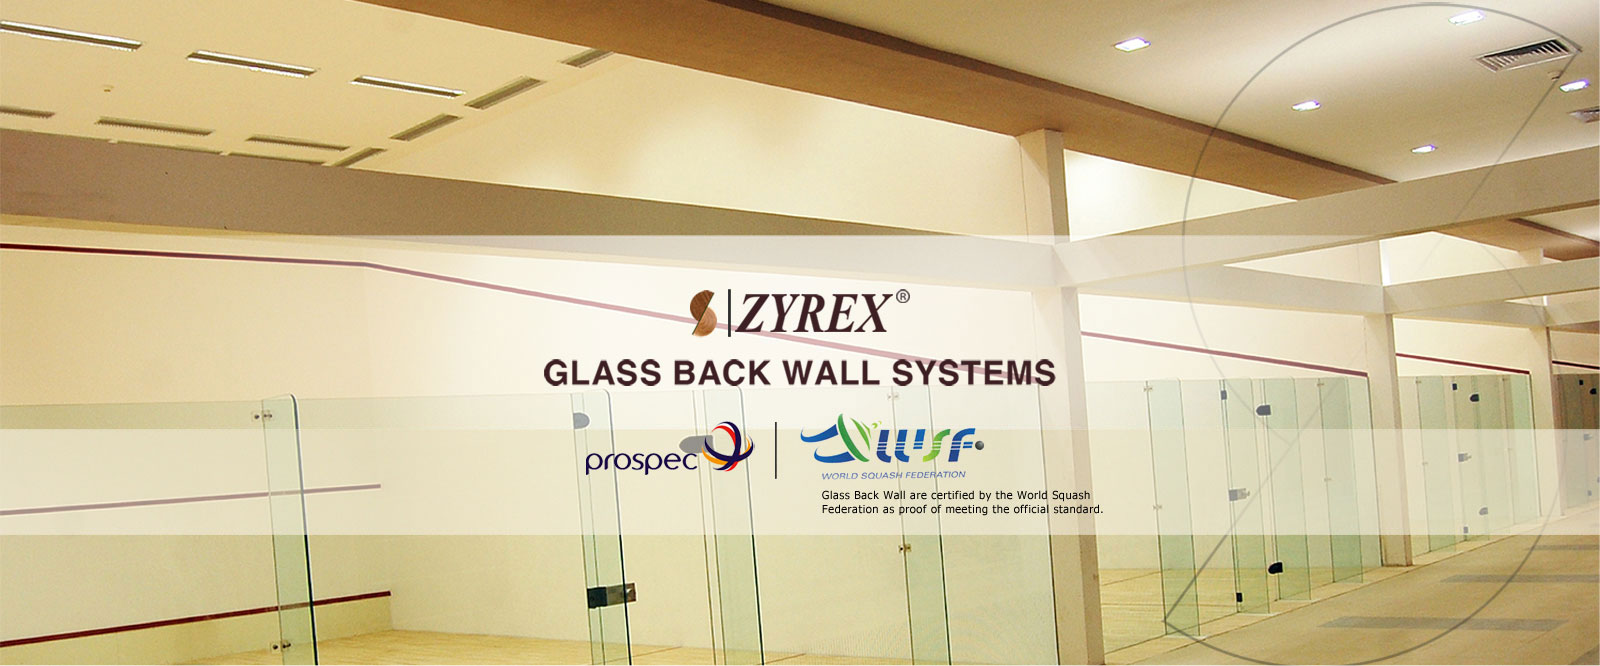 Zyrex - Glass Back Wall System